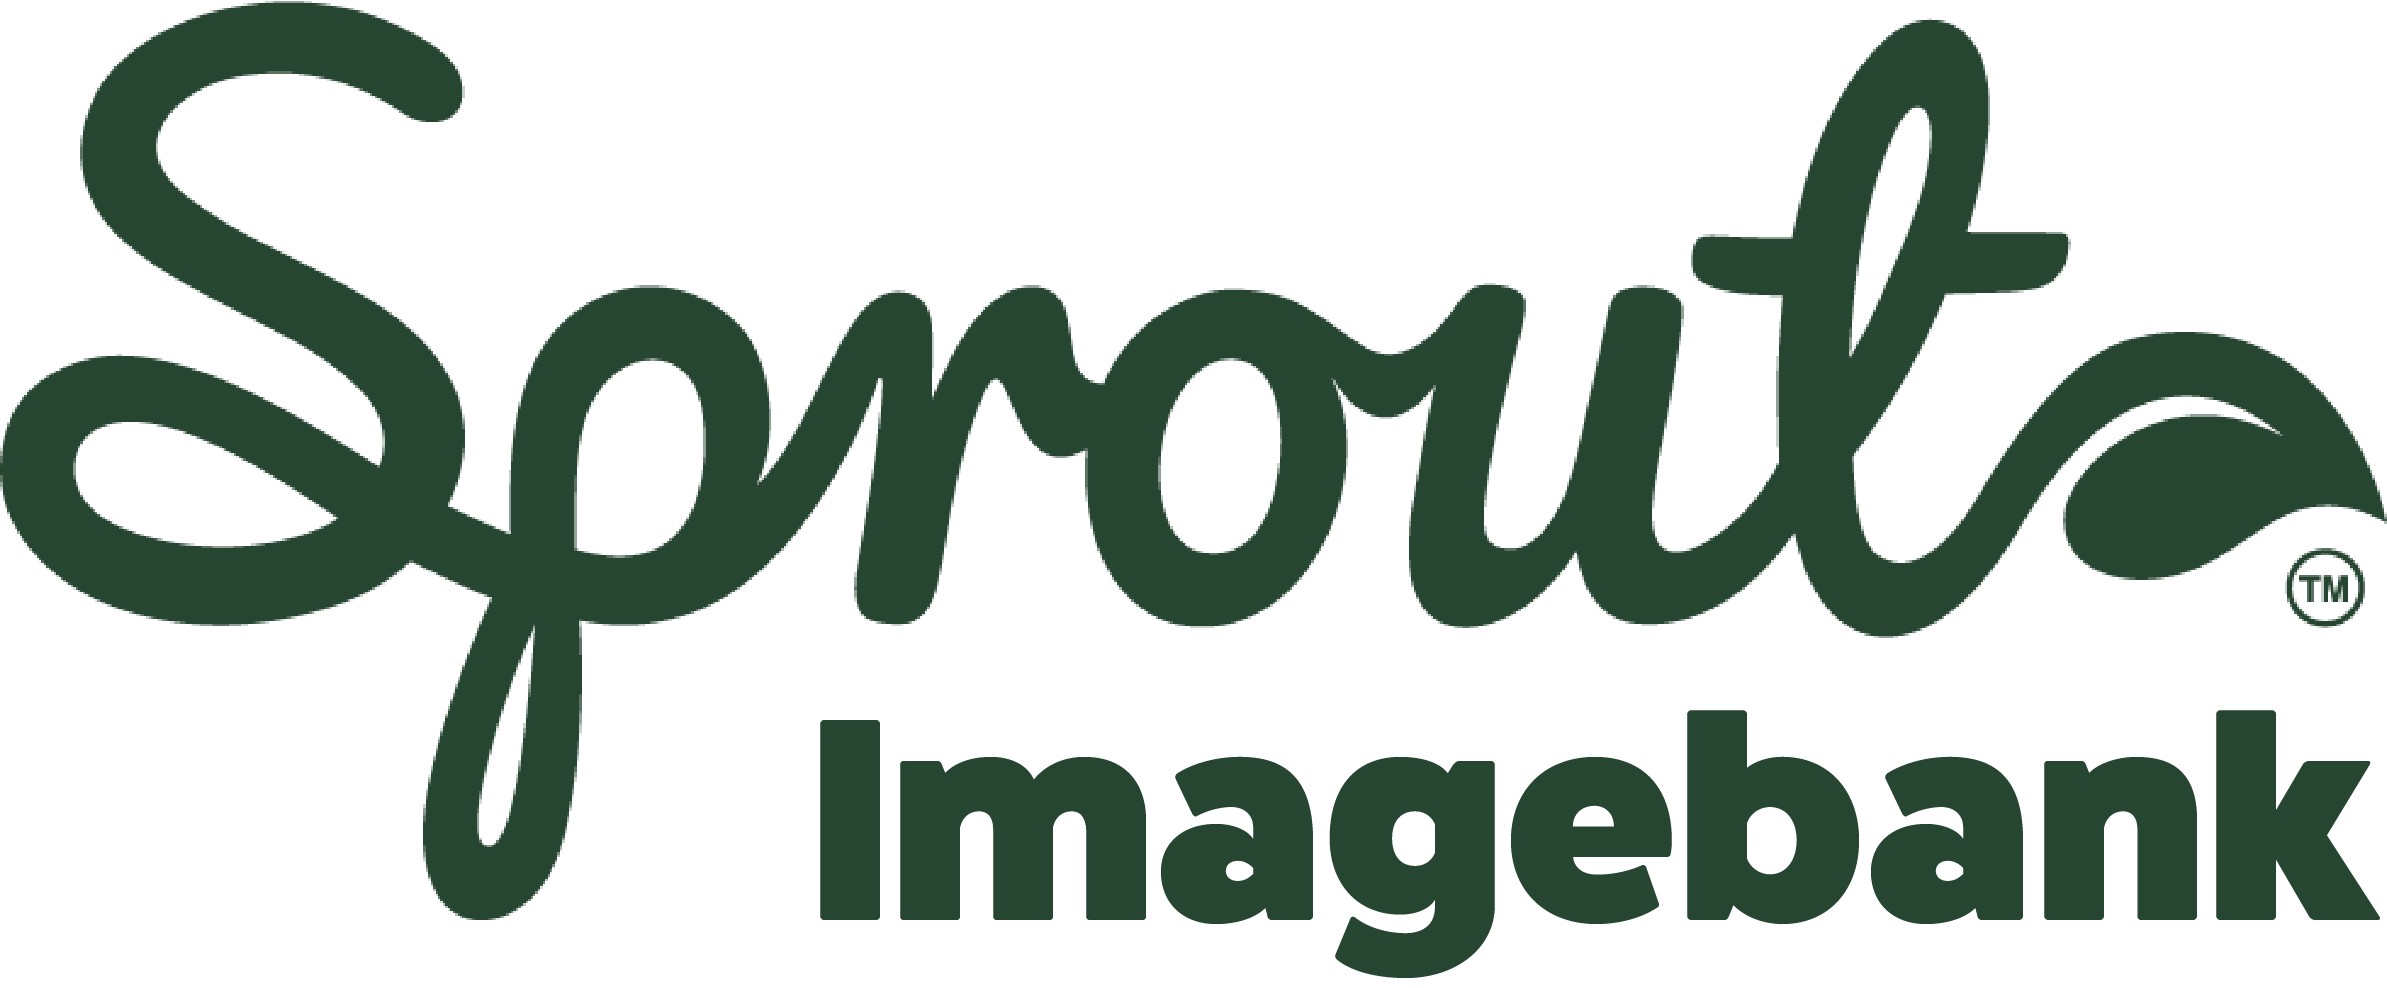 Sproutworld Imagebank